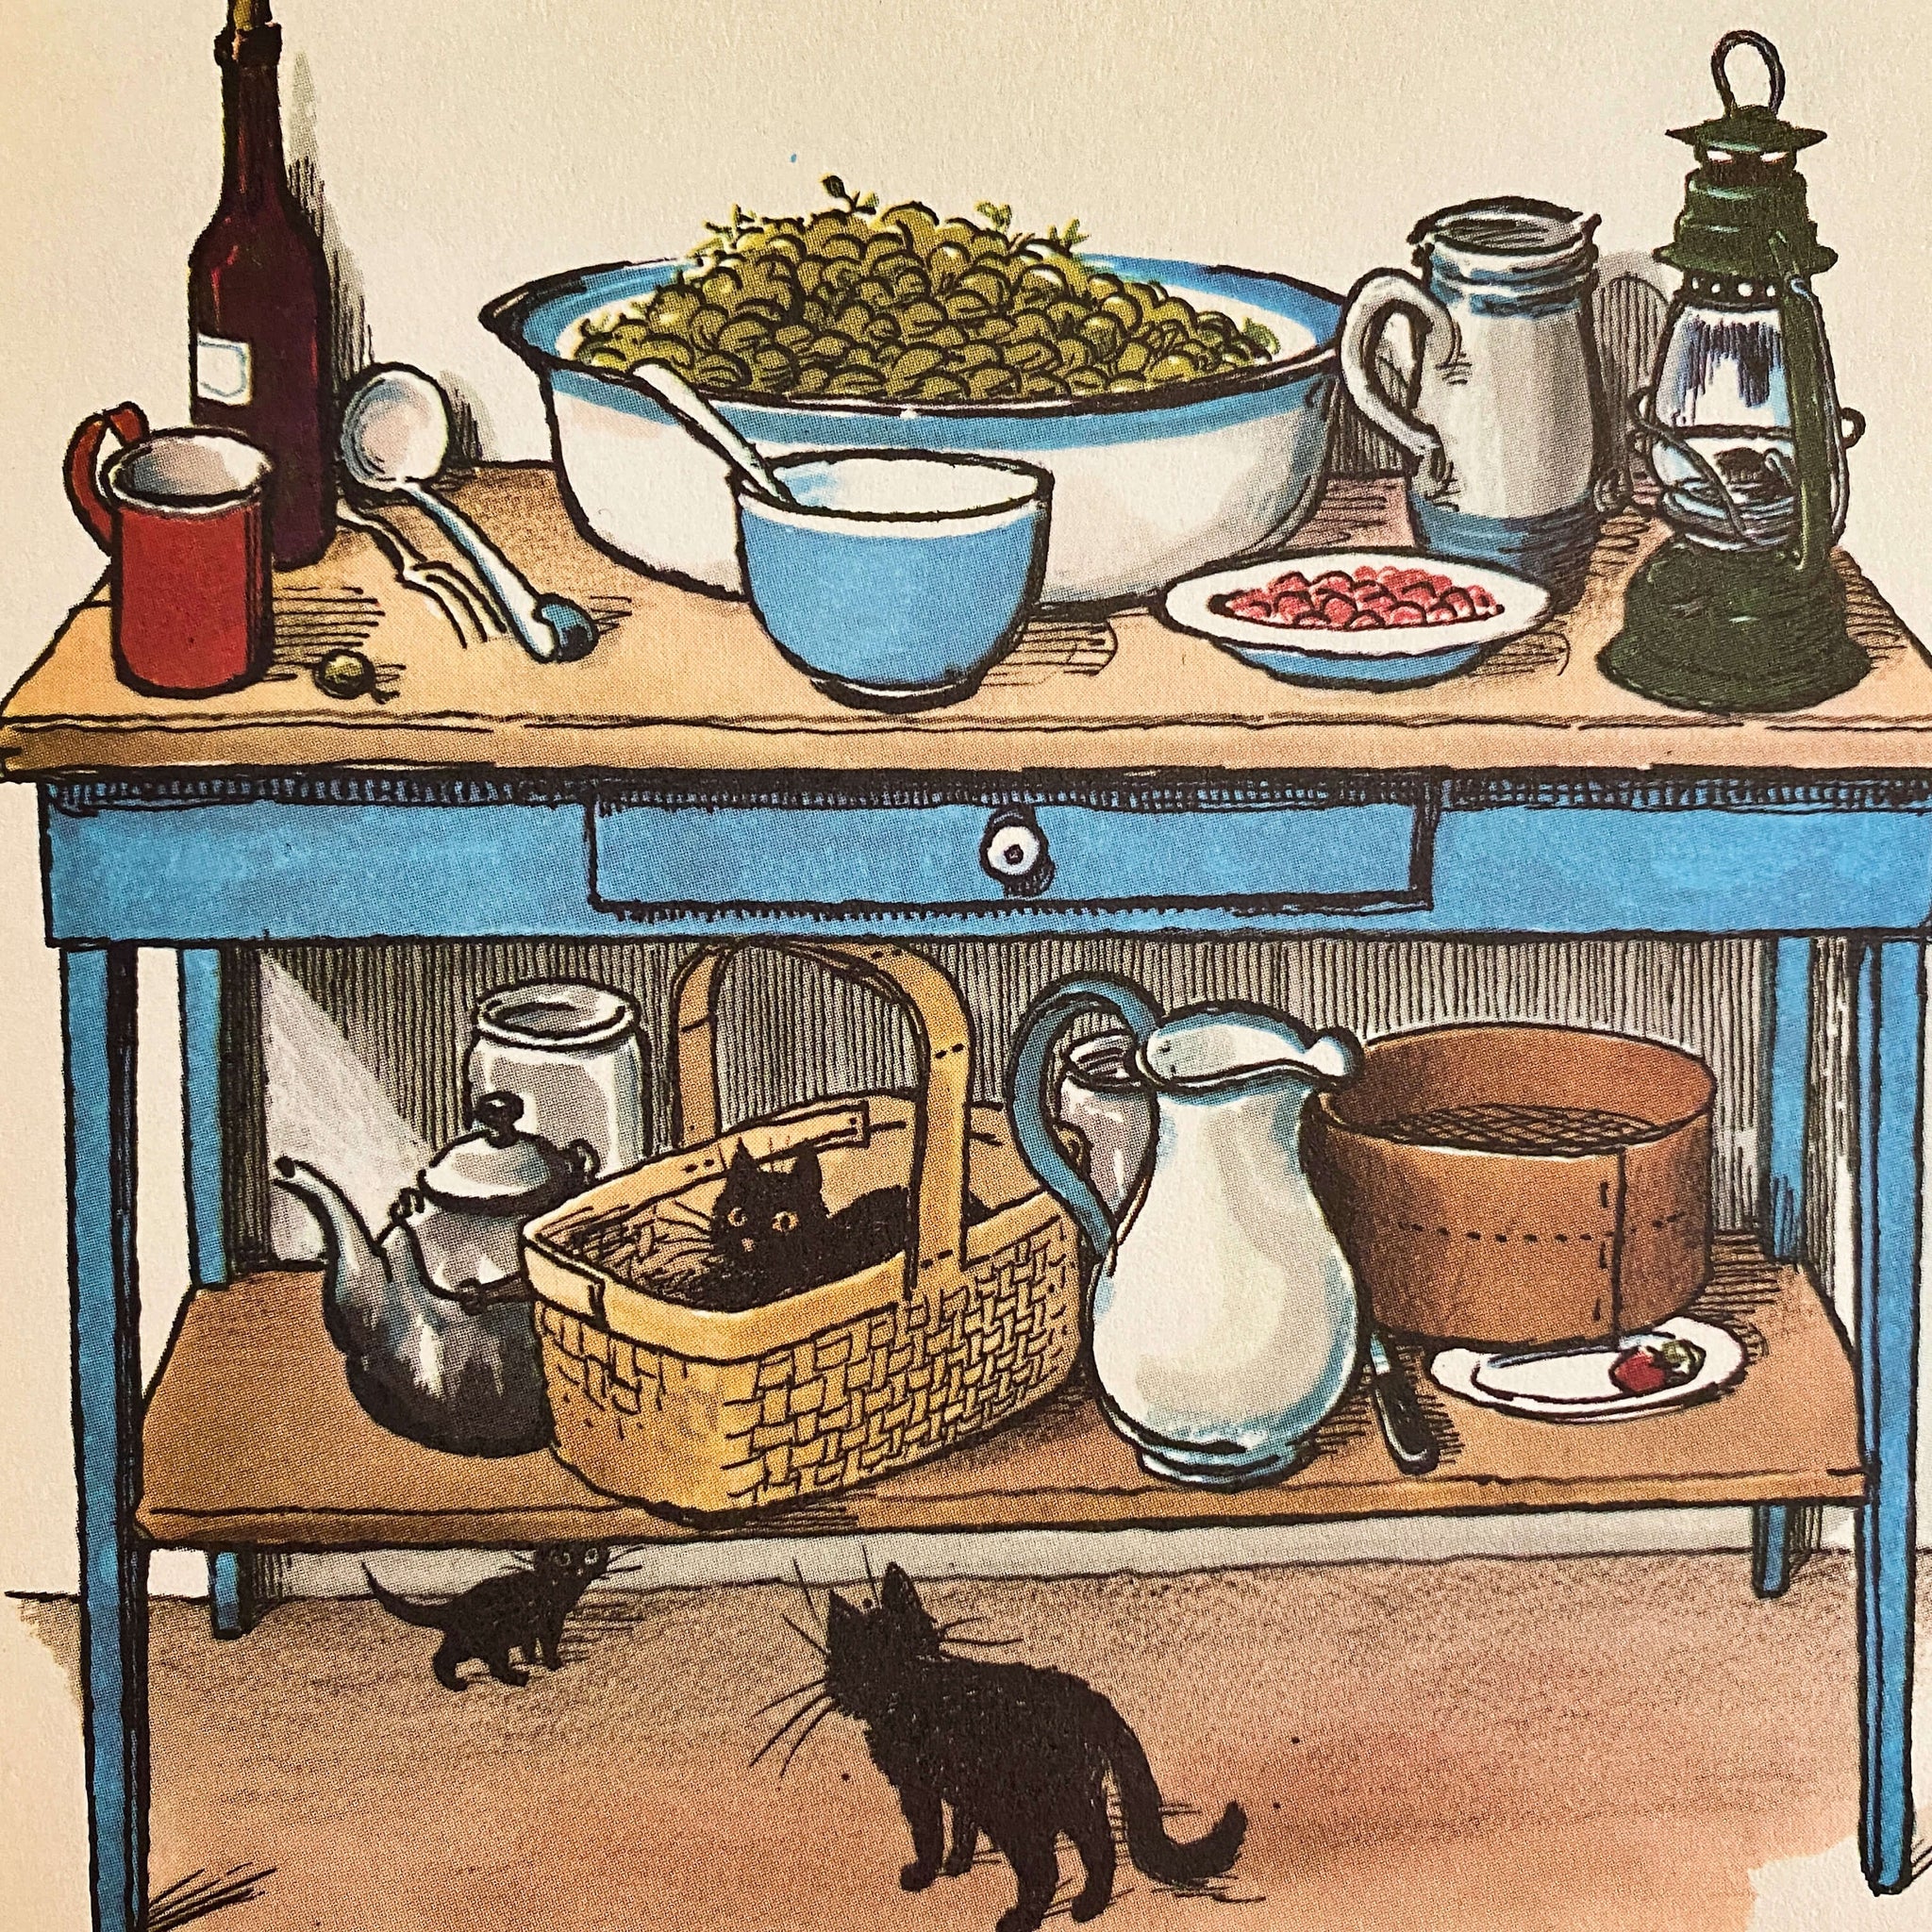 The Margaret Rudkin Pepperidge Farm Cookbook - 1981 Edition